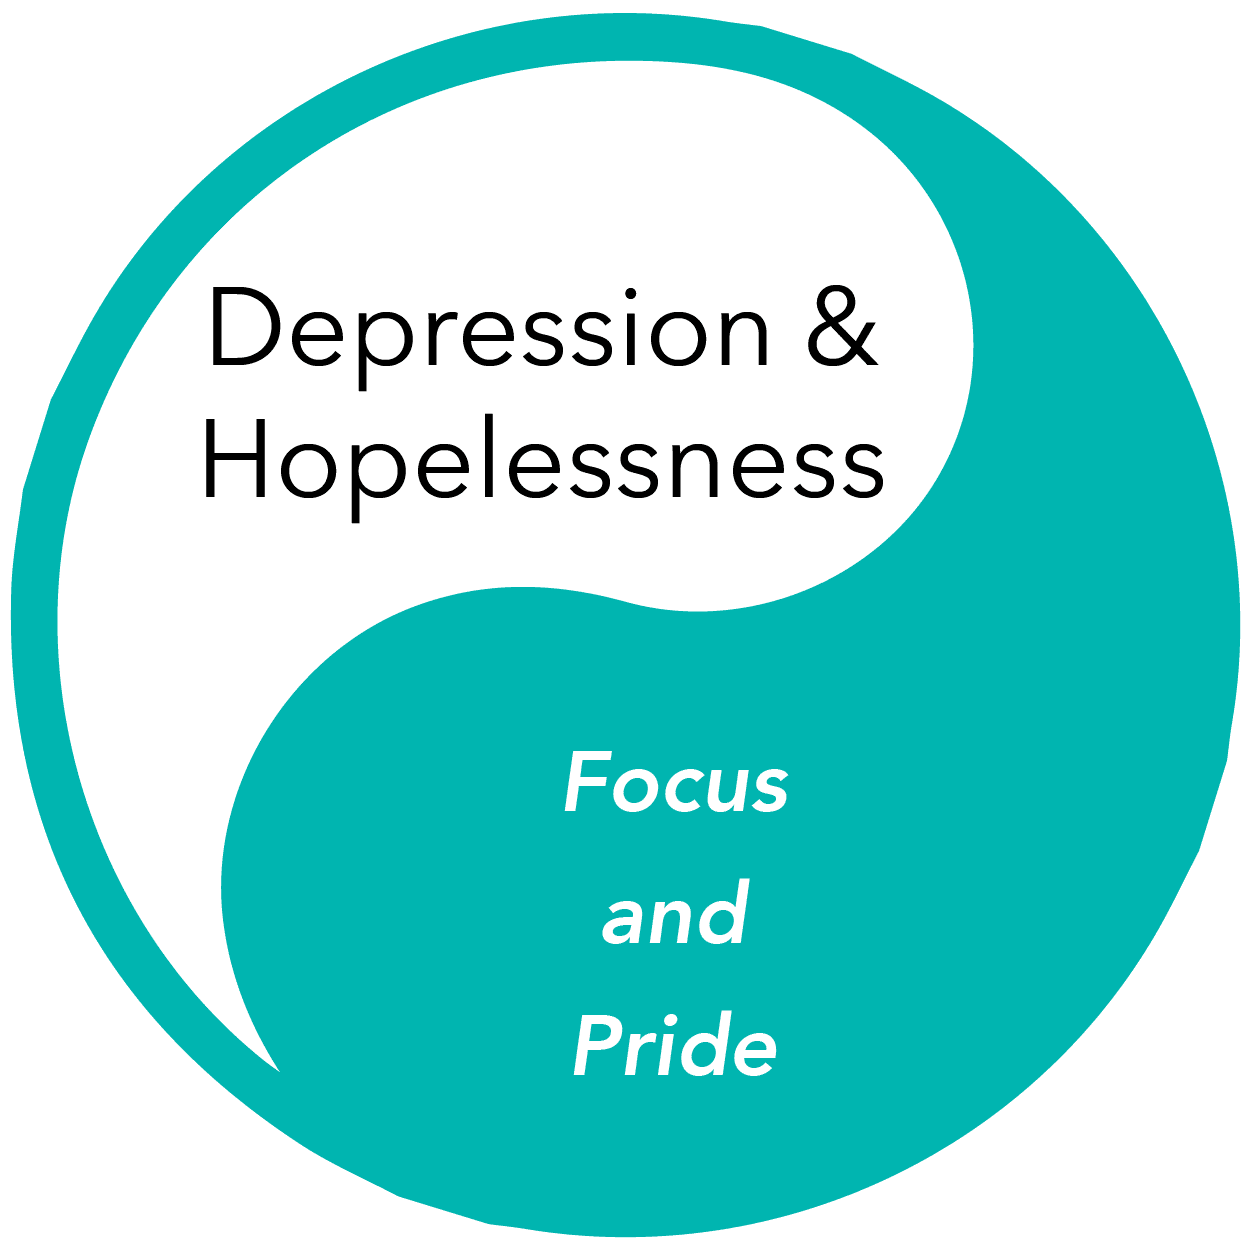 Depression & Hopelessness: Focus and Pride